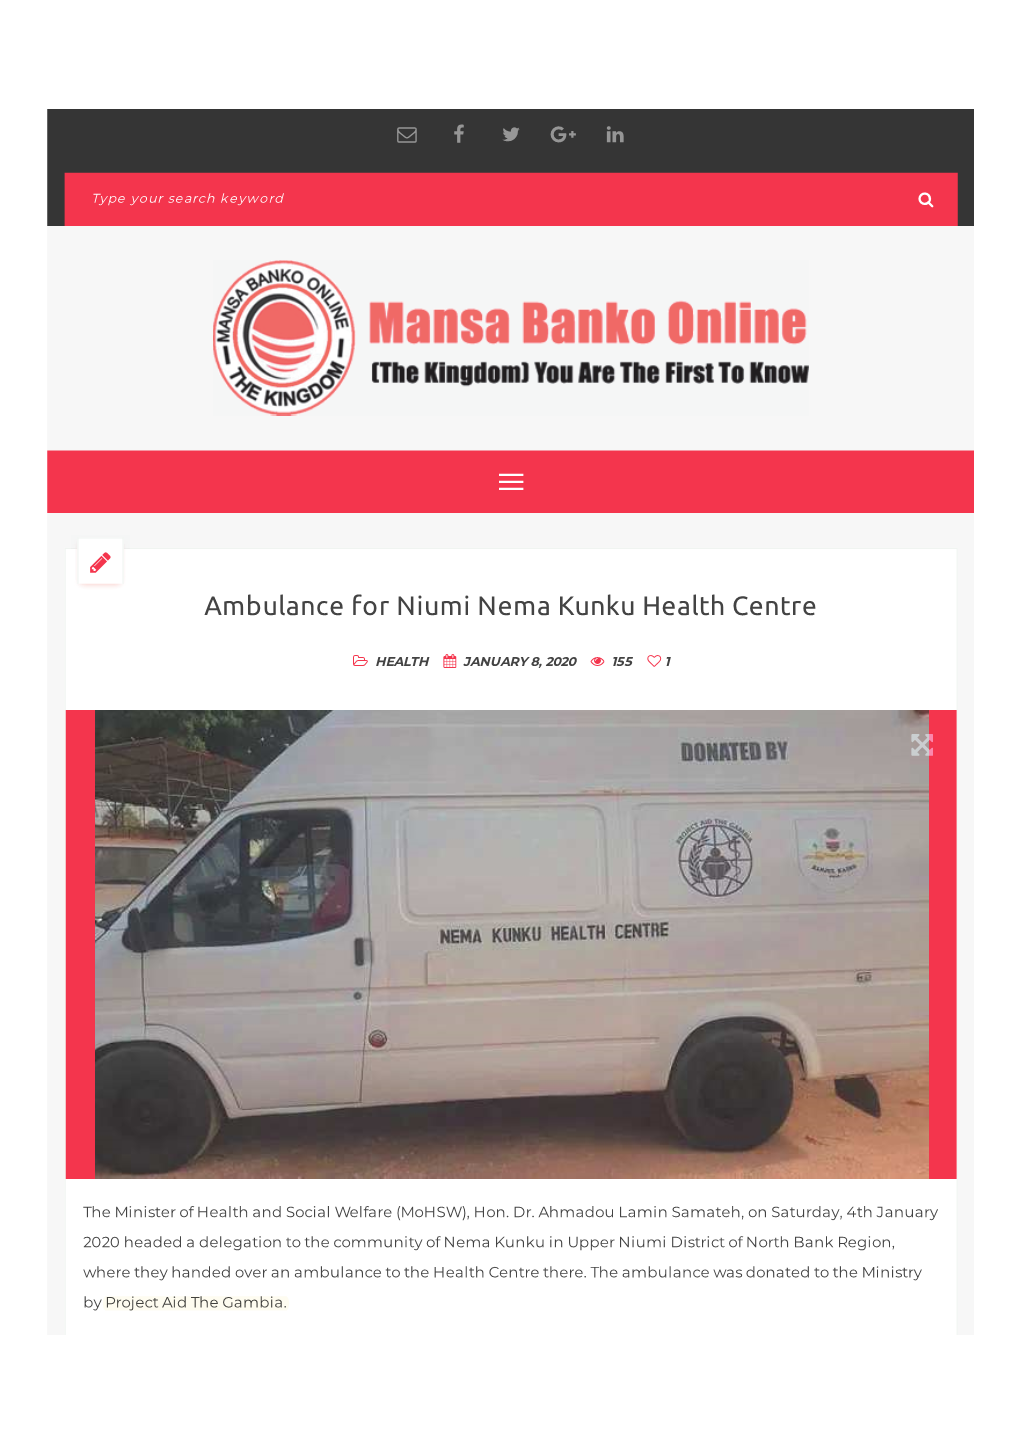 Ambulance for Niumi Nema Kunku Health Centre